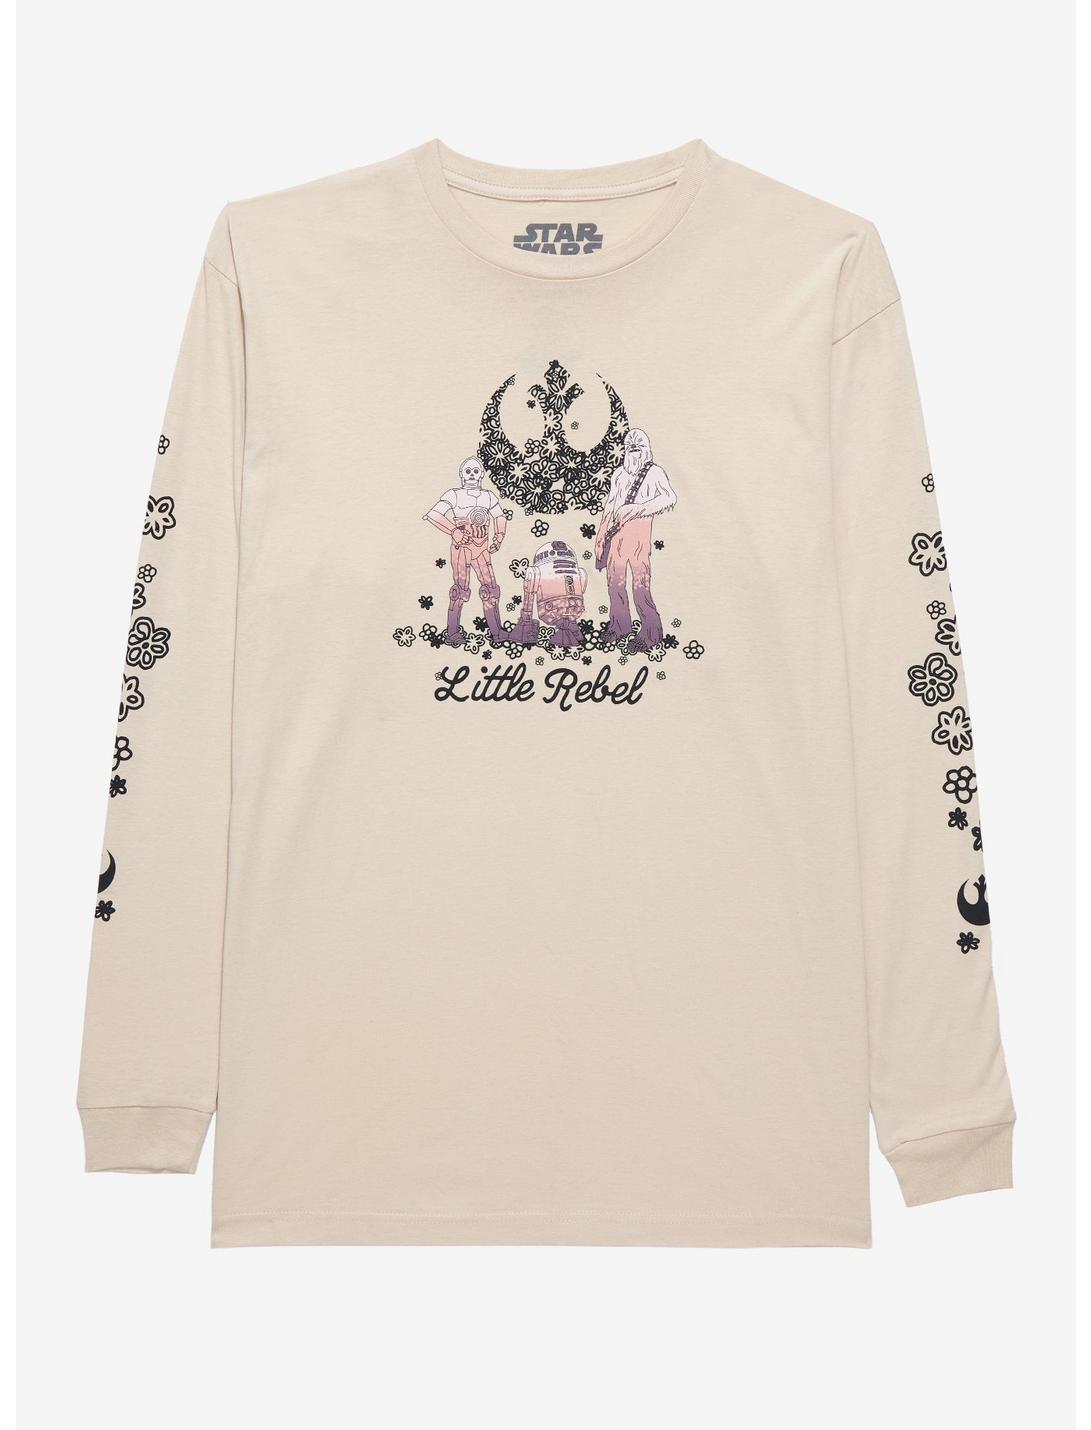 Star Wars Rebel Floral Long Sleeve T-Shirt, CREAM, hi-res